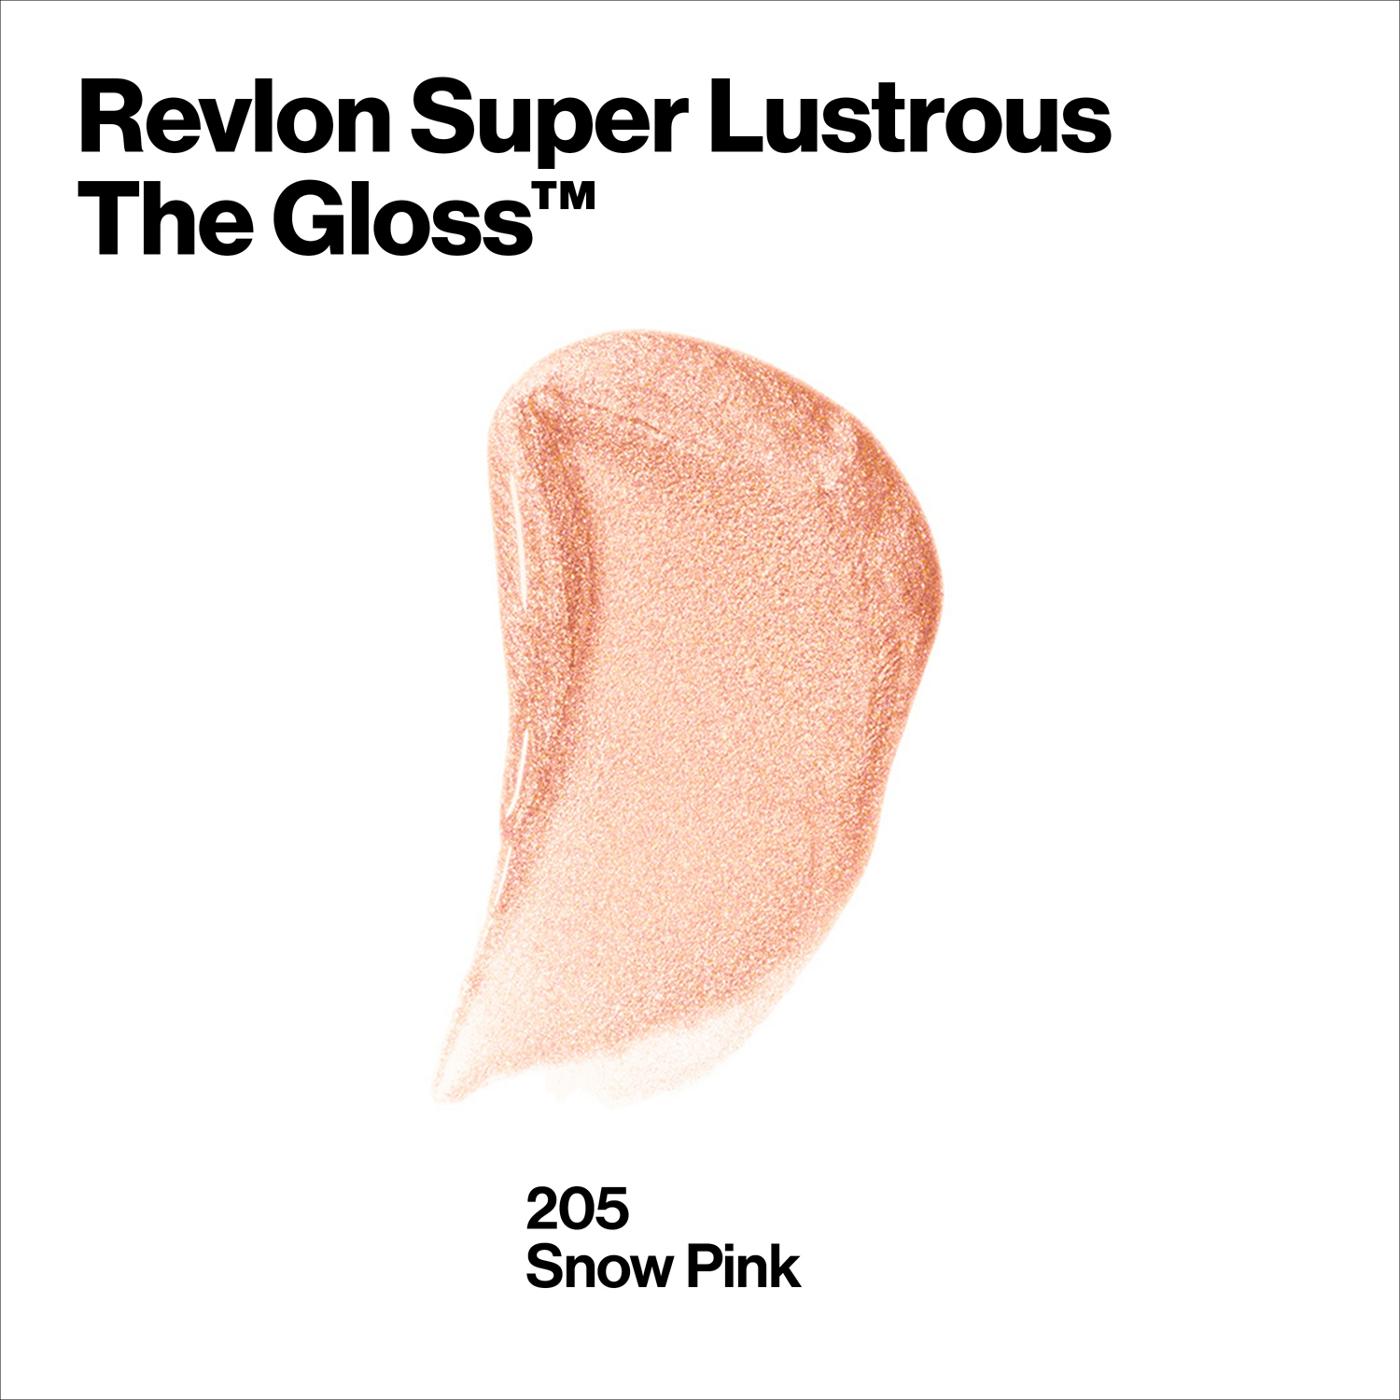 Revlon Super Lustrous The Gloss, 205 Snow Pink; image 8 of 9